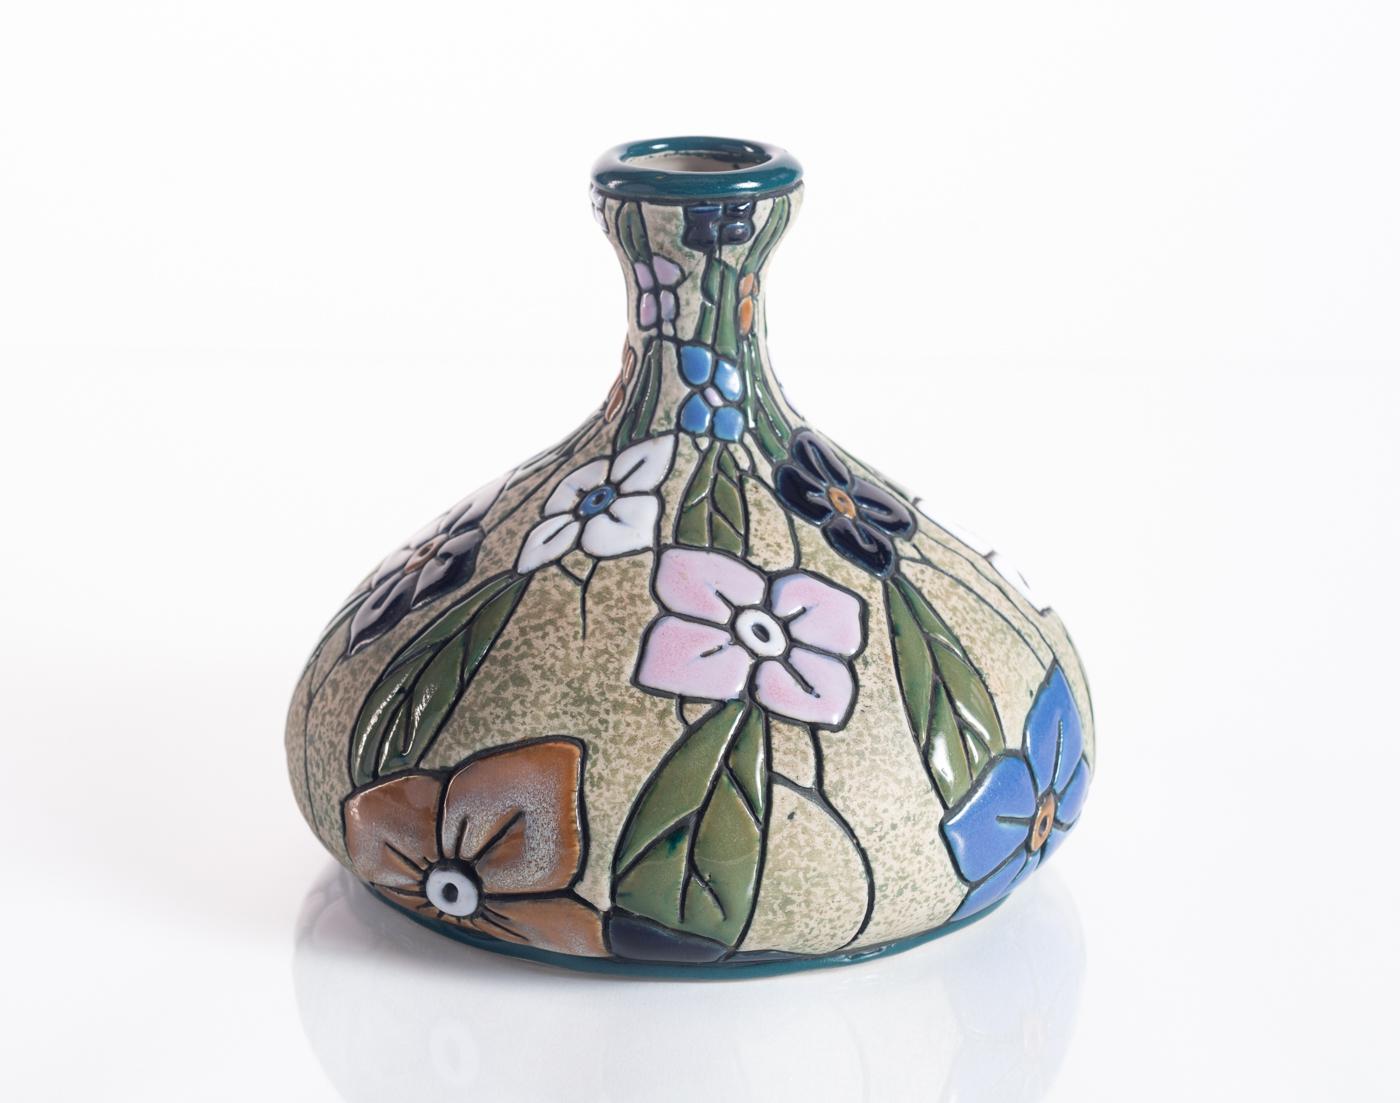 Cloisonné-Blumenvase von Amphora, Jugendstil um 1910